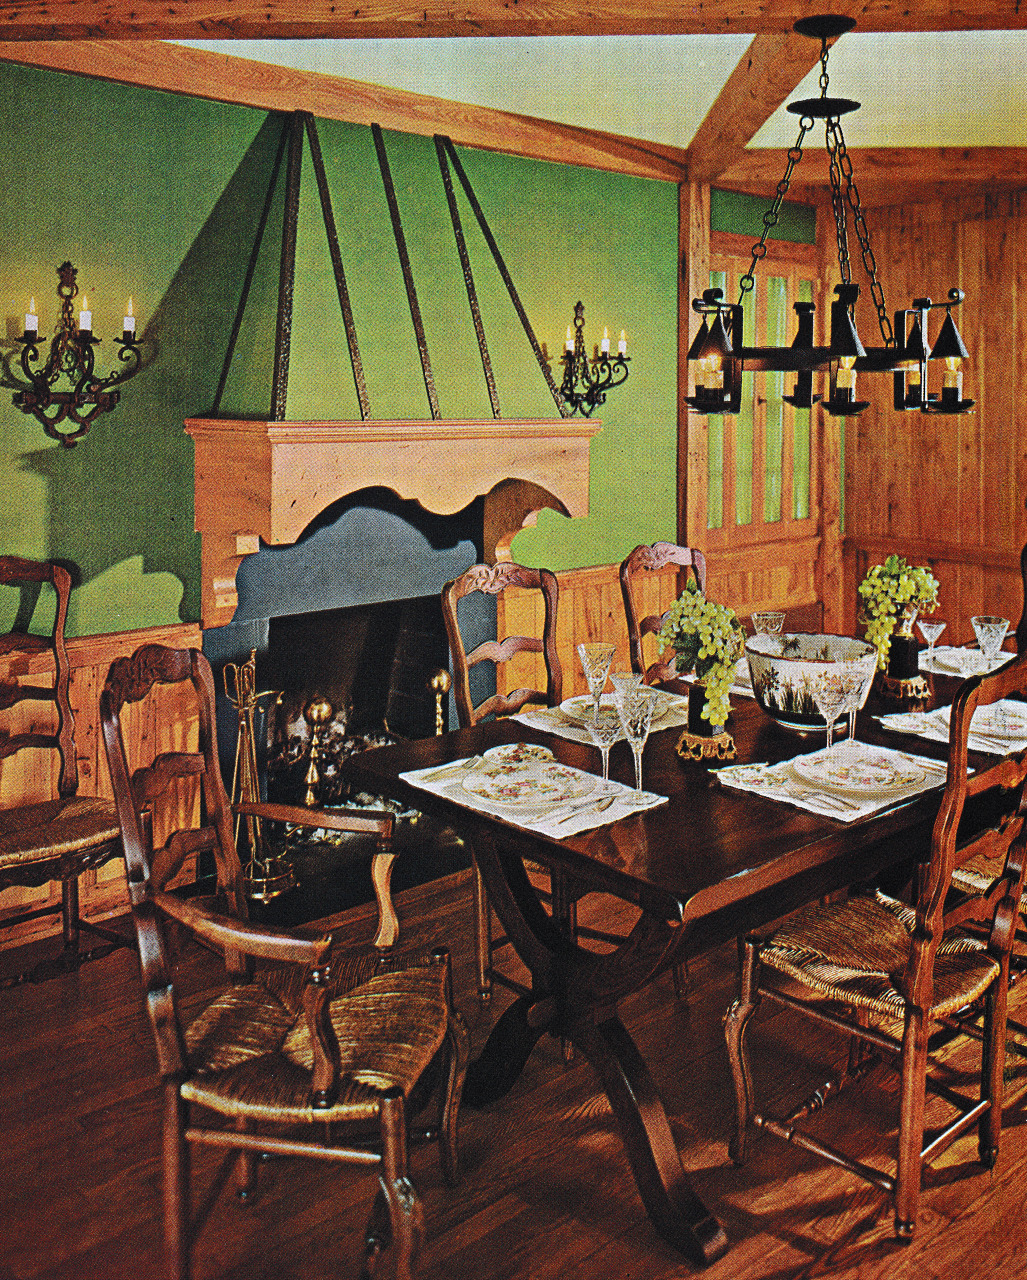 1970s Dining Room Decor - The Giki Tiki